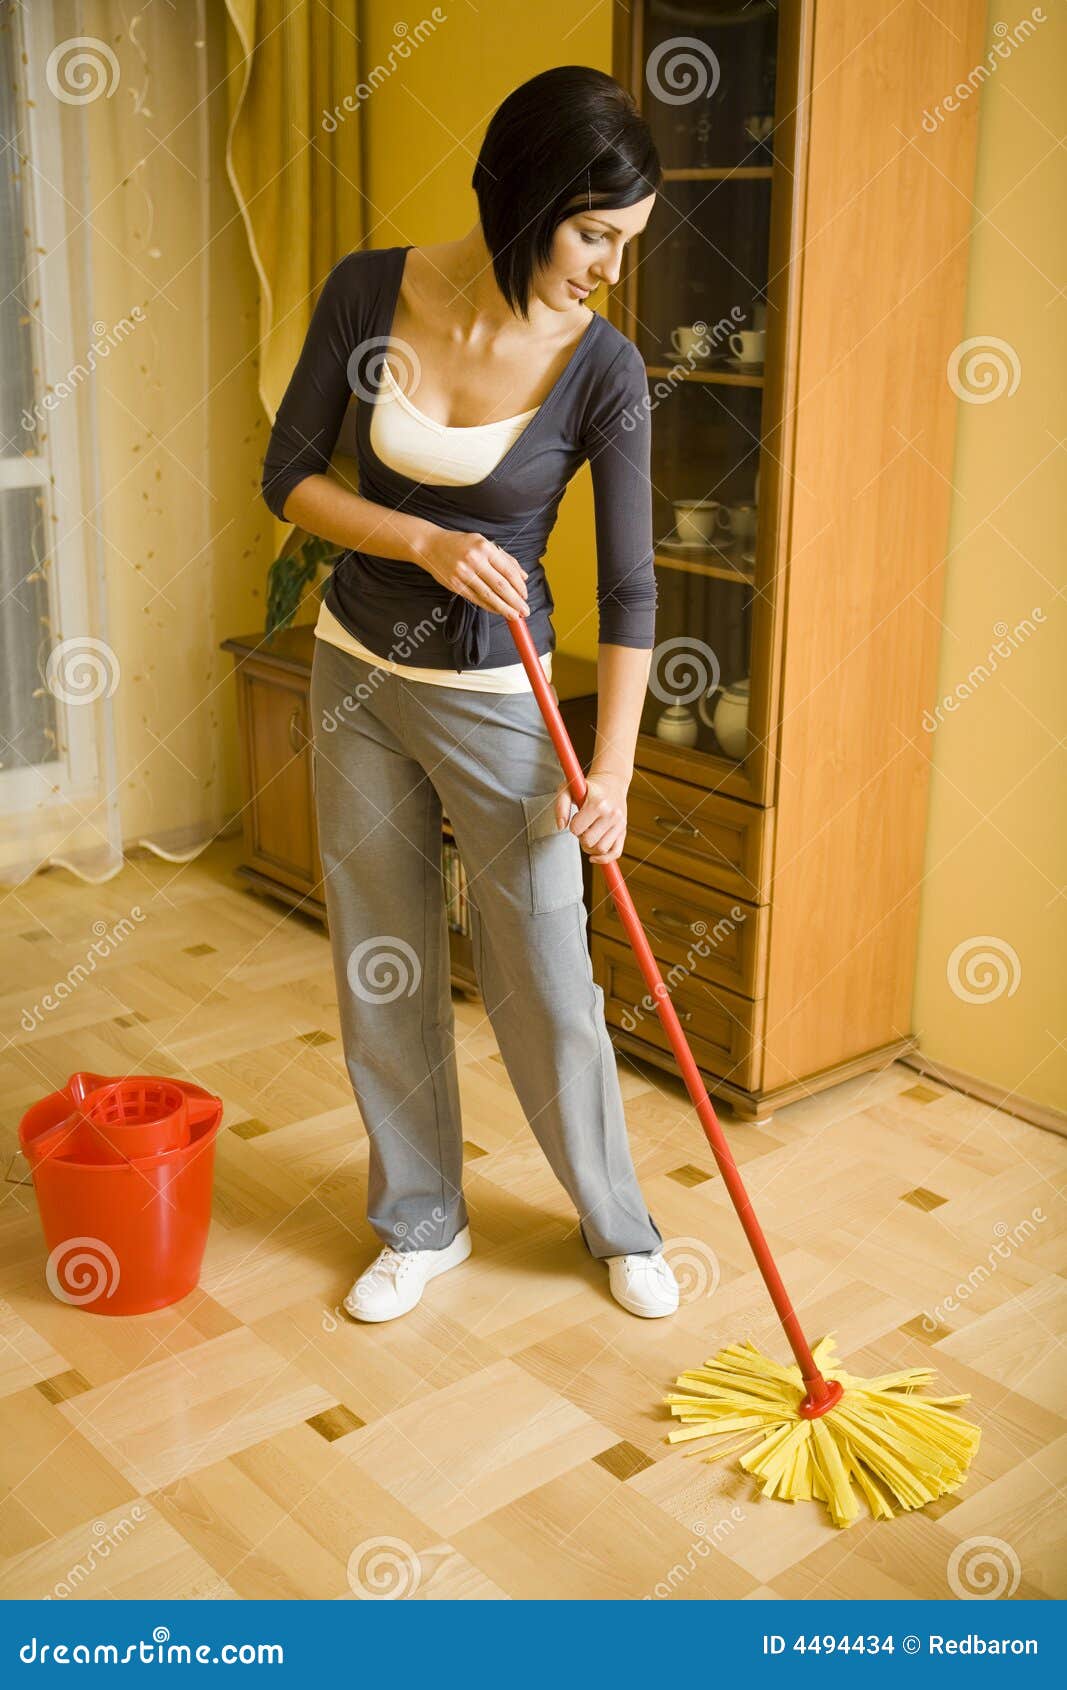 578 Woman Scrubbing Floor Stock Photos image